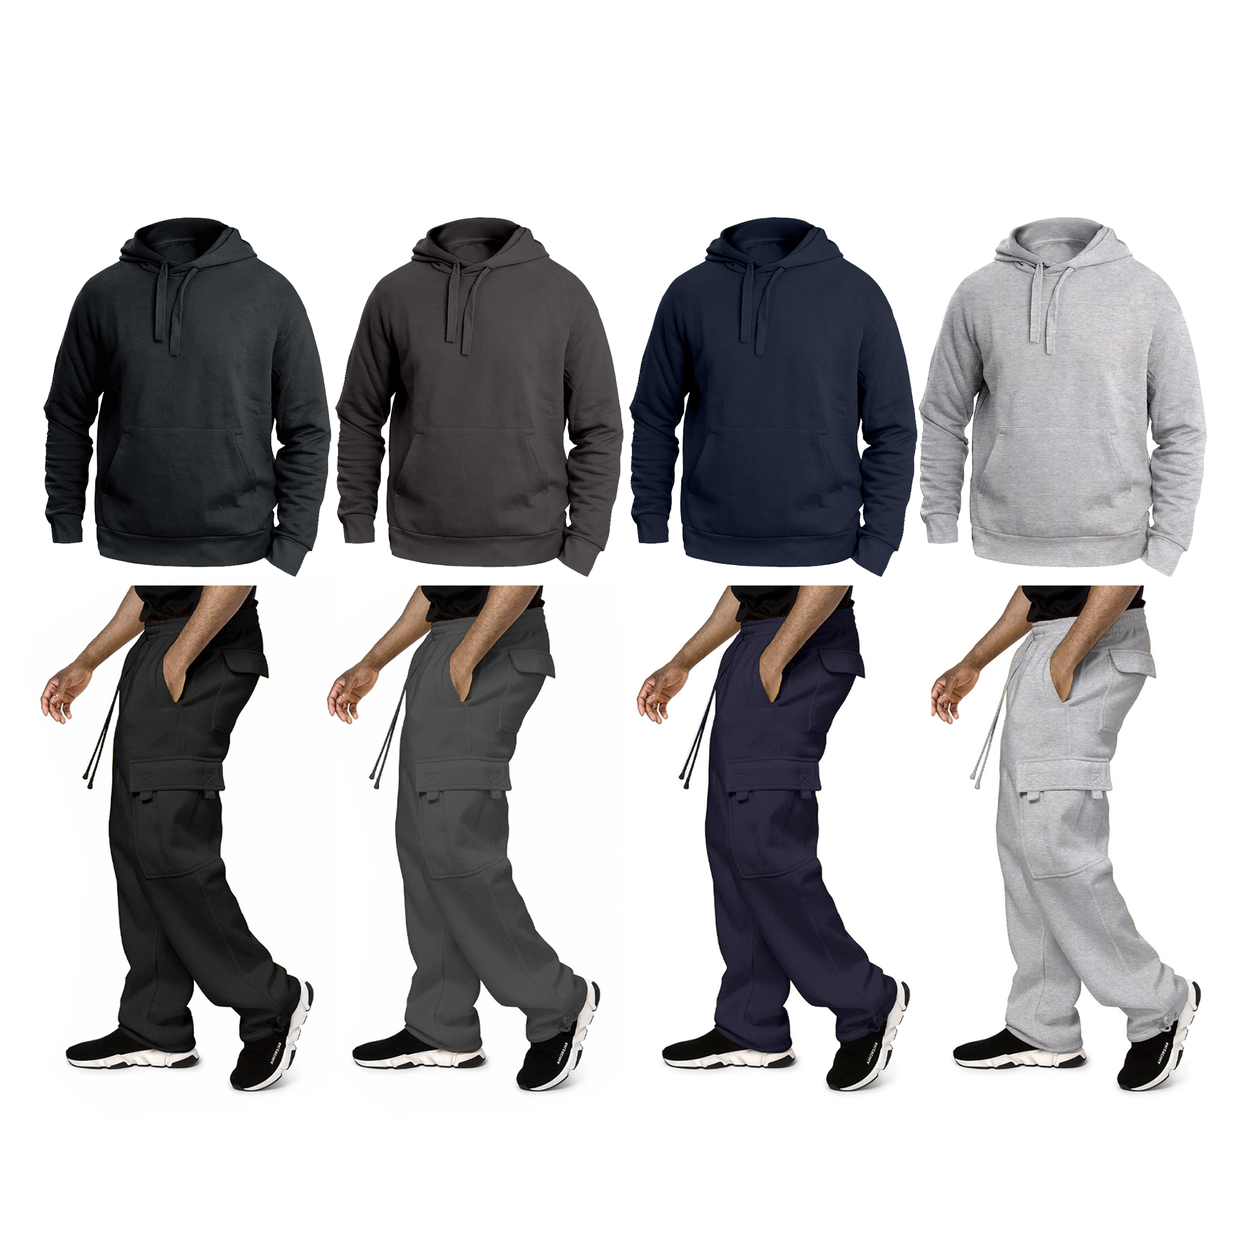 2-Pack: Men's Big & Tall Winter Warm Cozy Athletic Fleece Lined Multi-Pocket Cargo Sweatsuit - Black, X-large